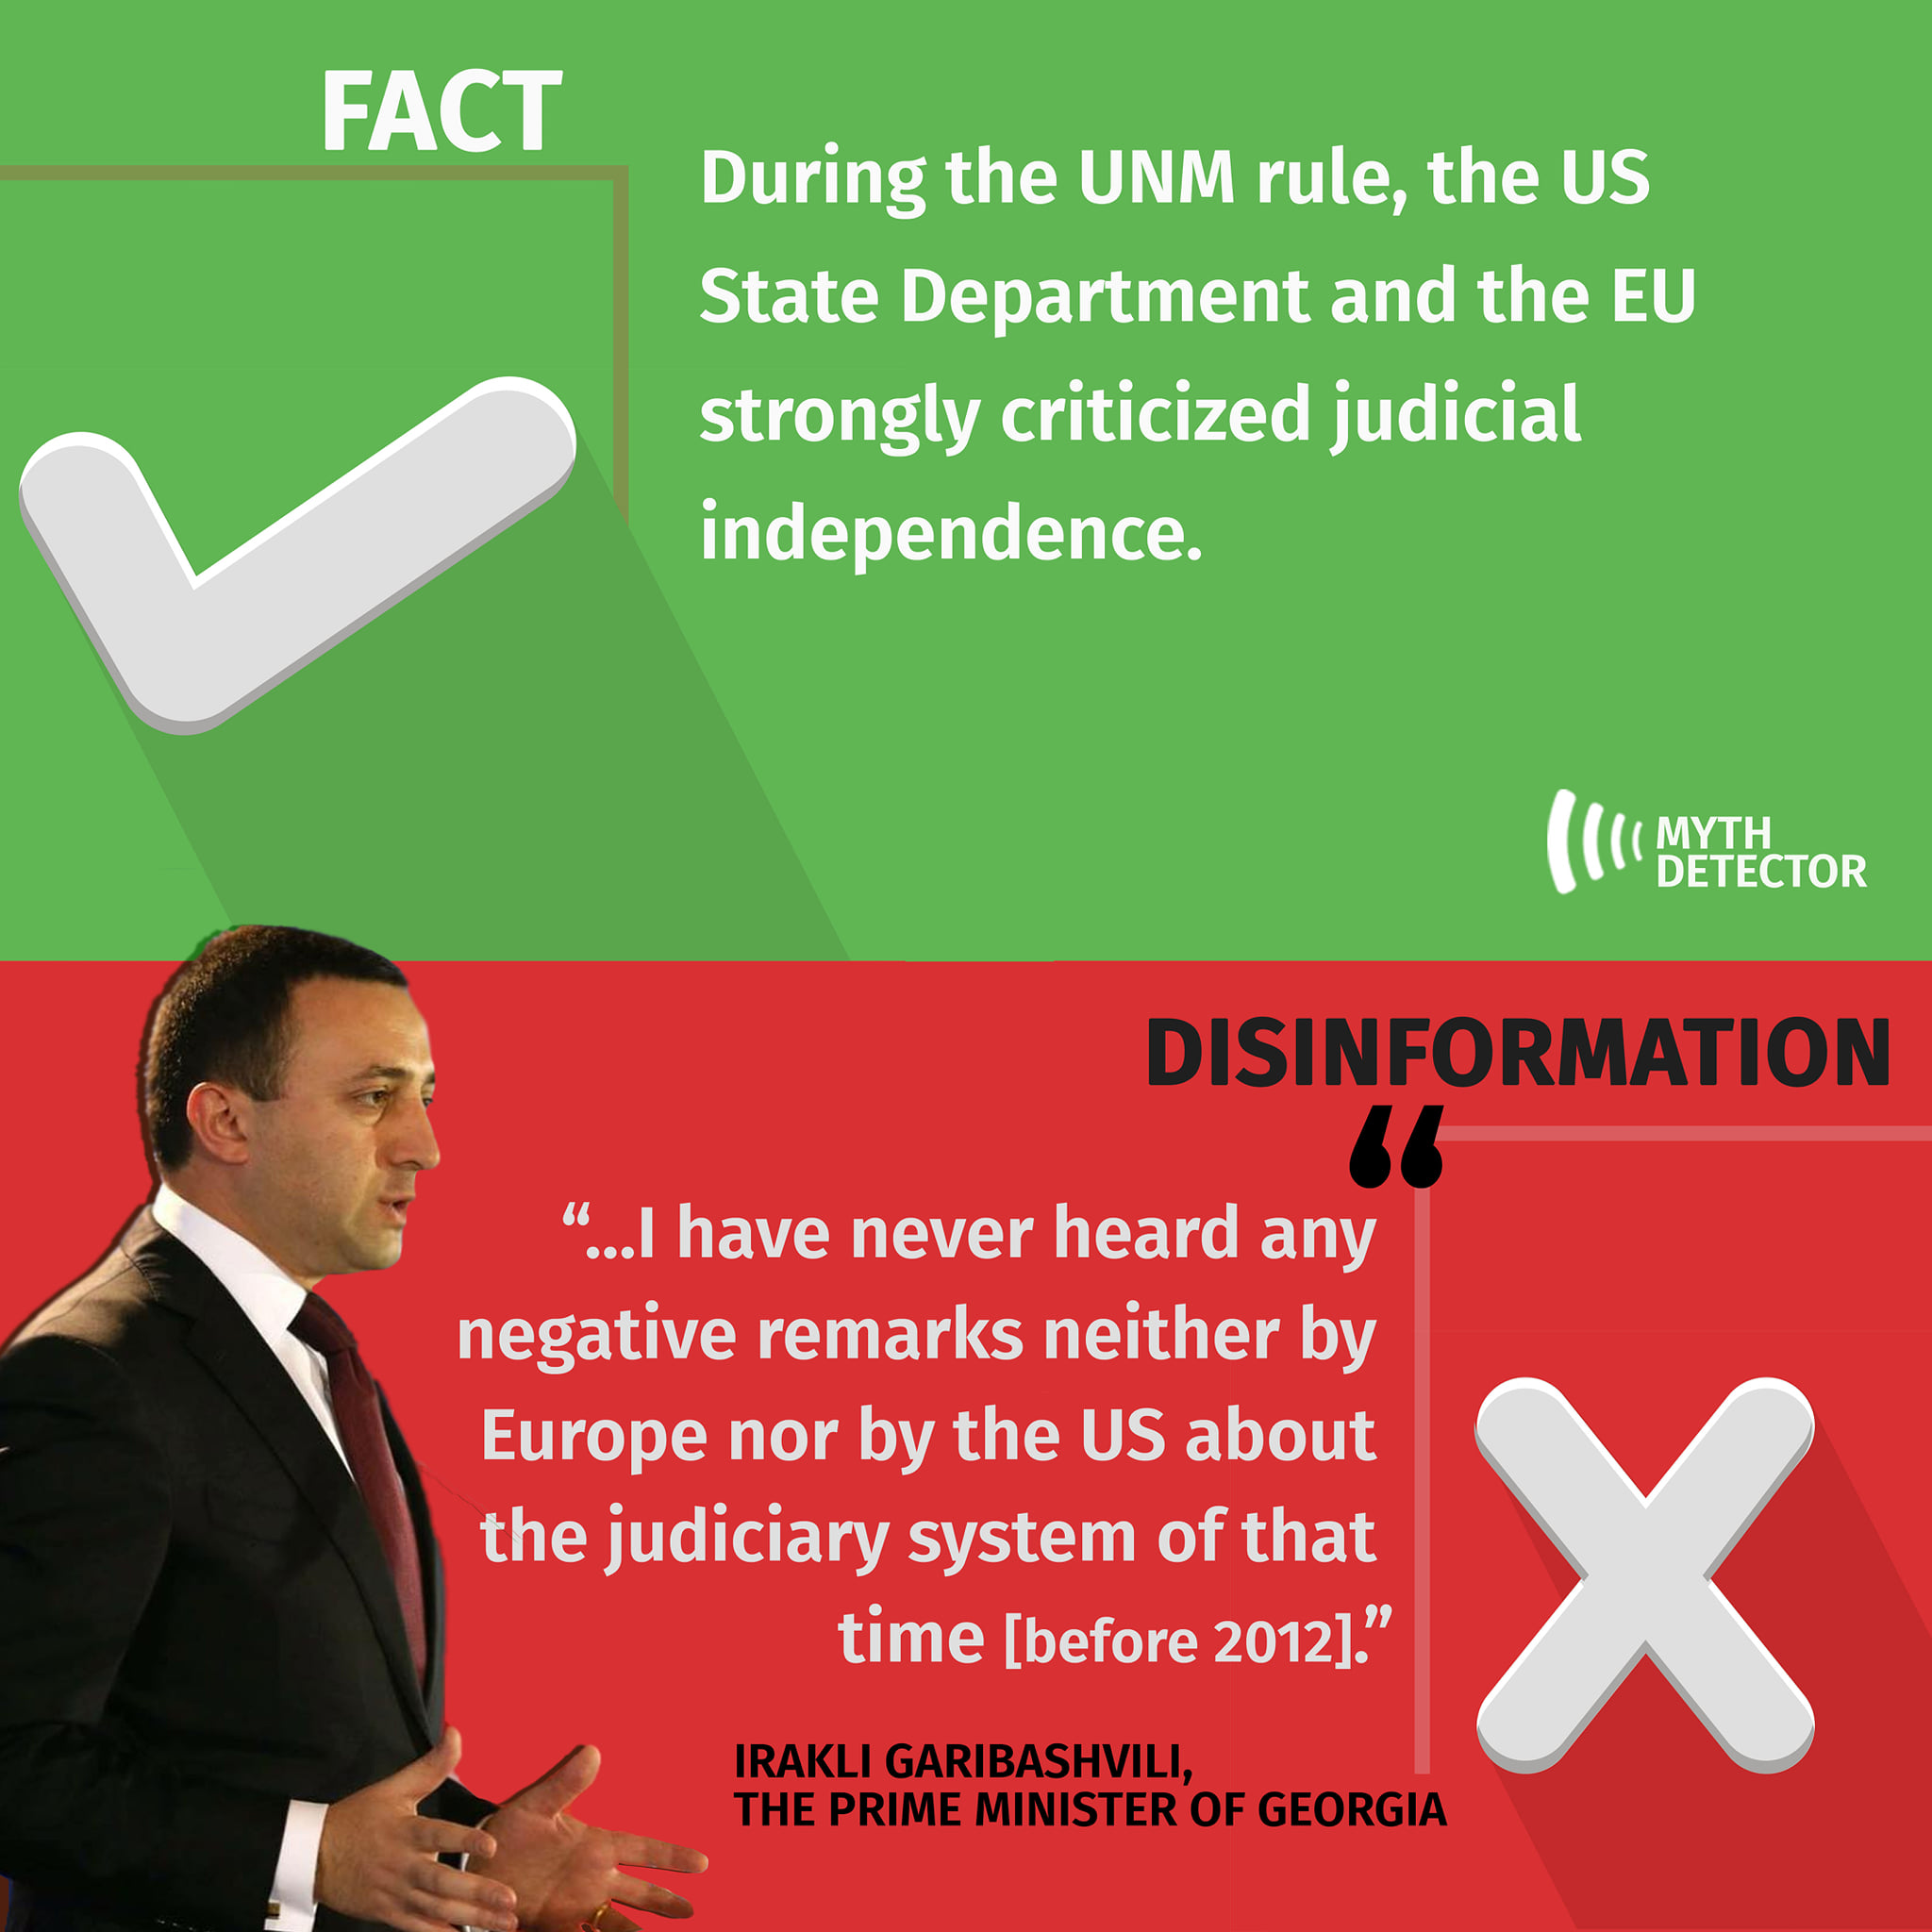 Why has Irakli Garibashvili never heard Western Criticism of the #UNM-era judiciary?